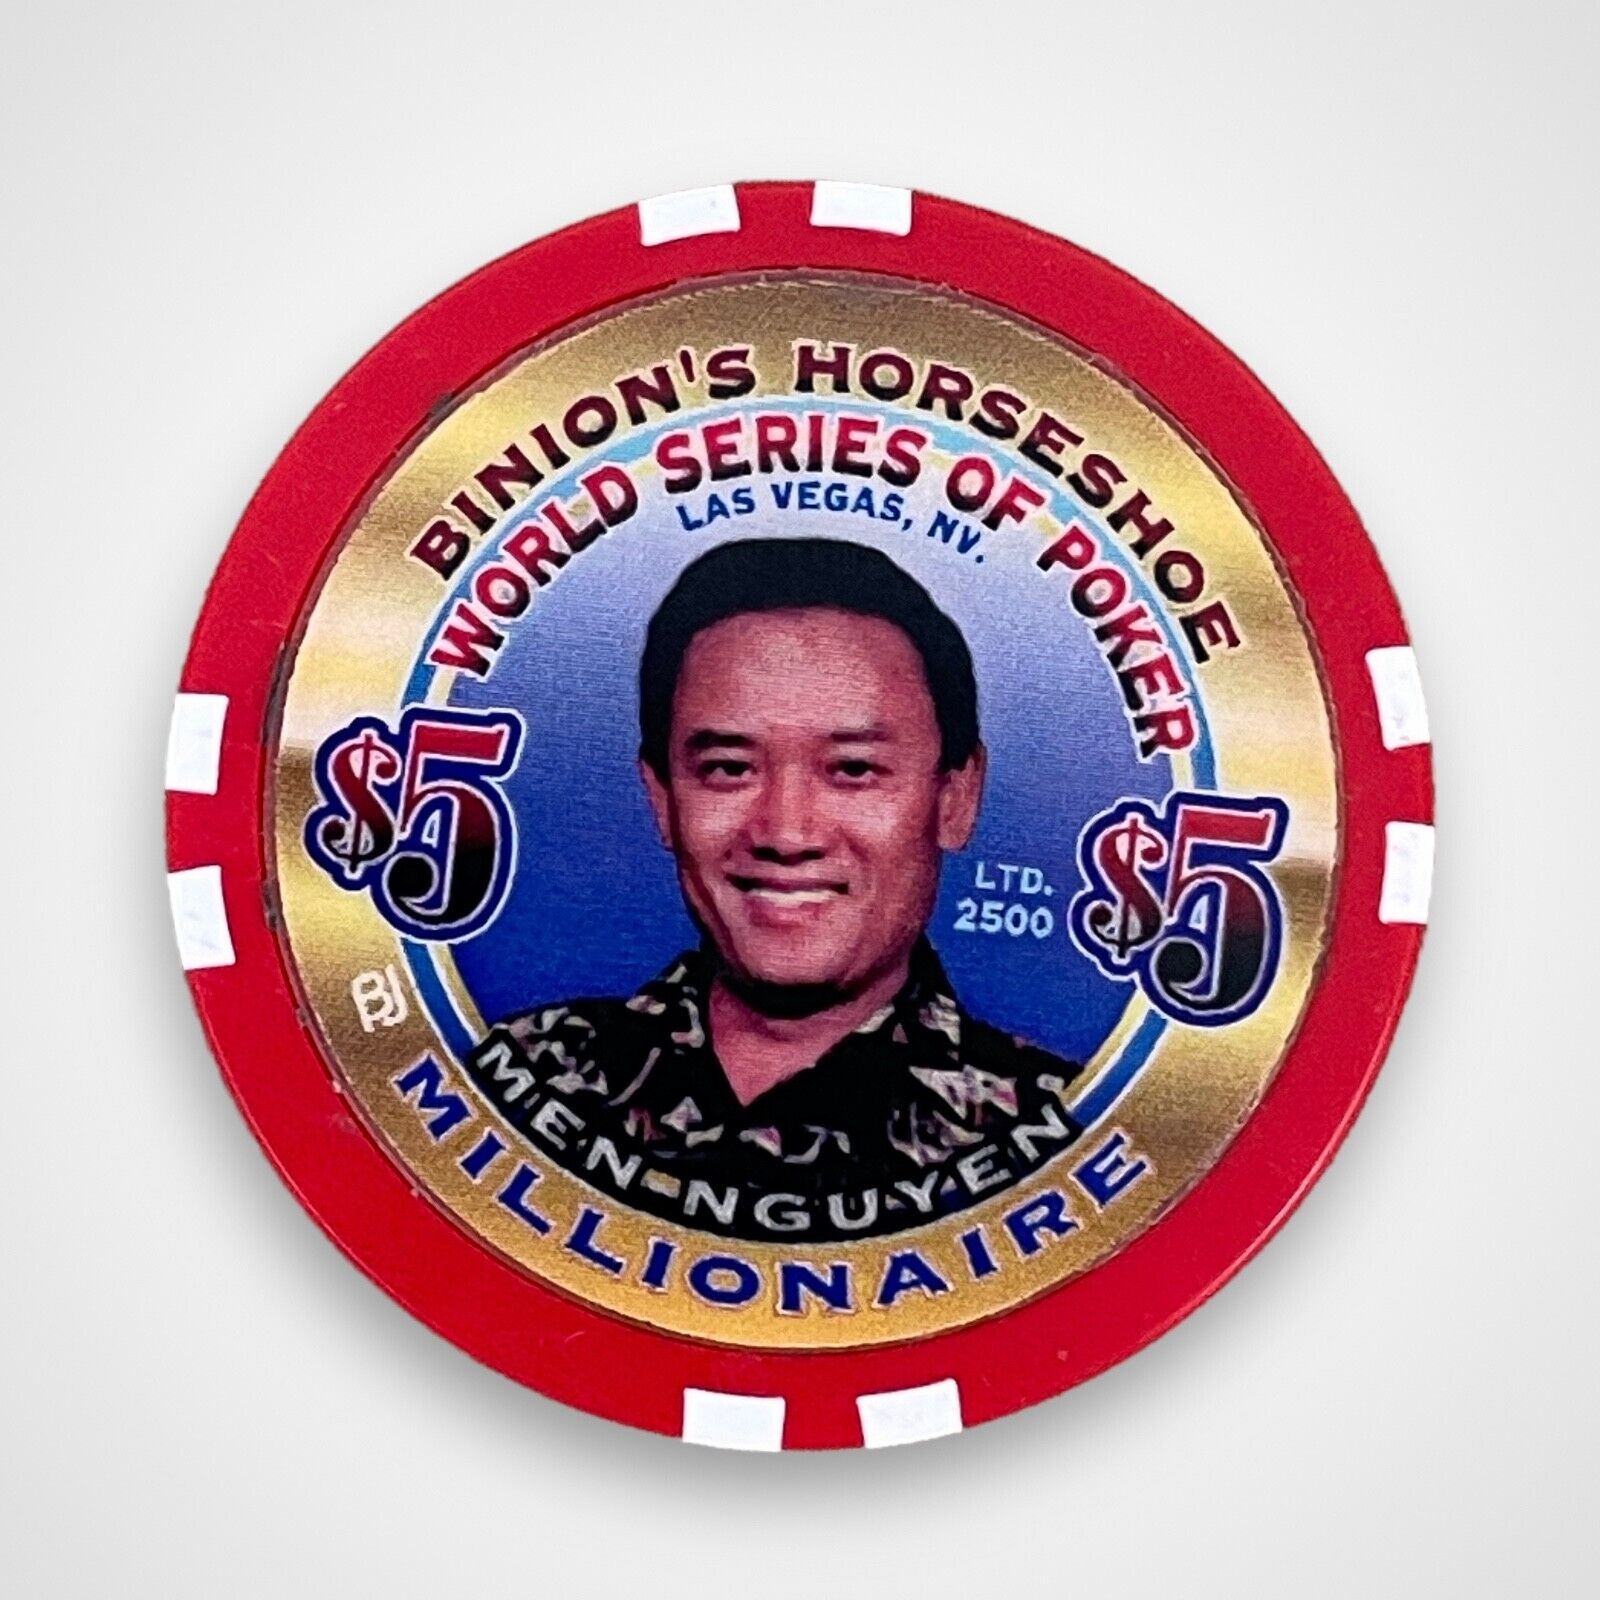 Binion\'s Horseshoe World Series of Poker Millionaire $5 Poker Chip MEN NGUYEN